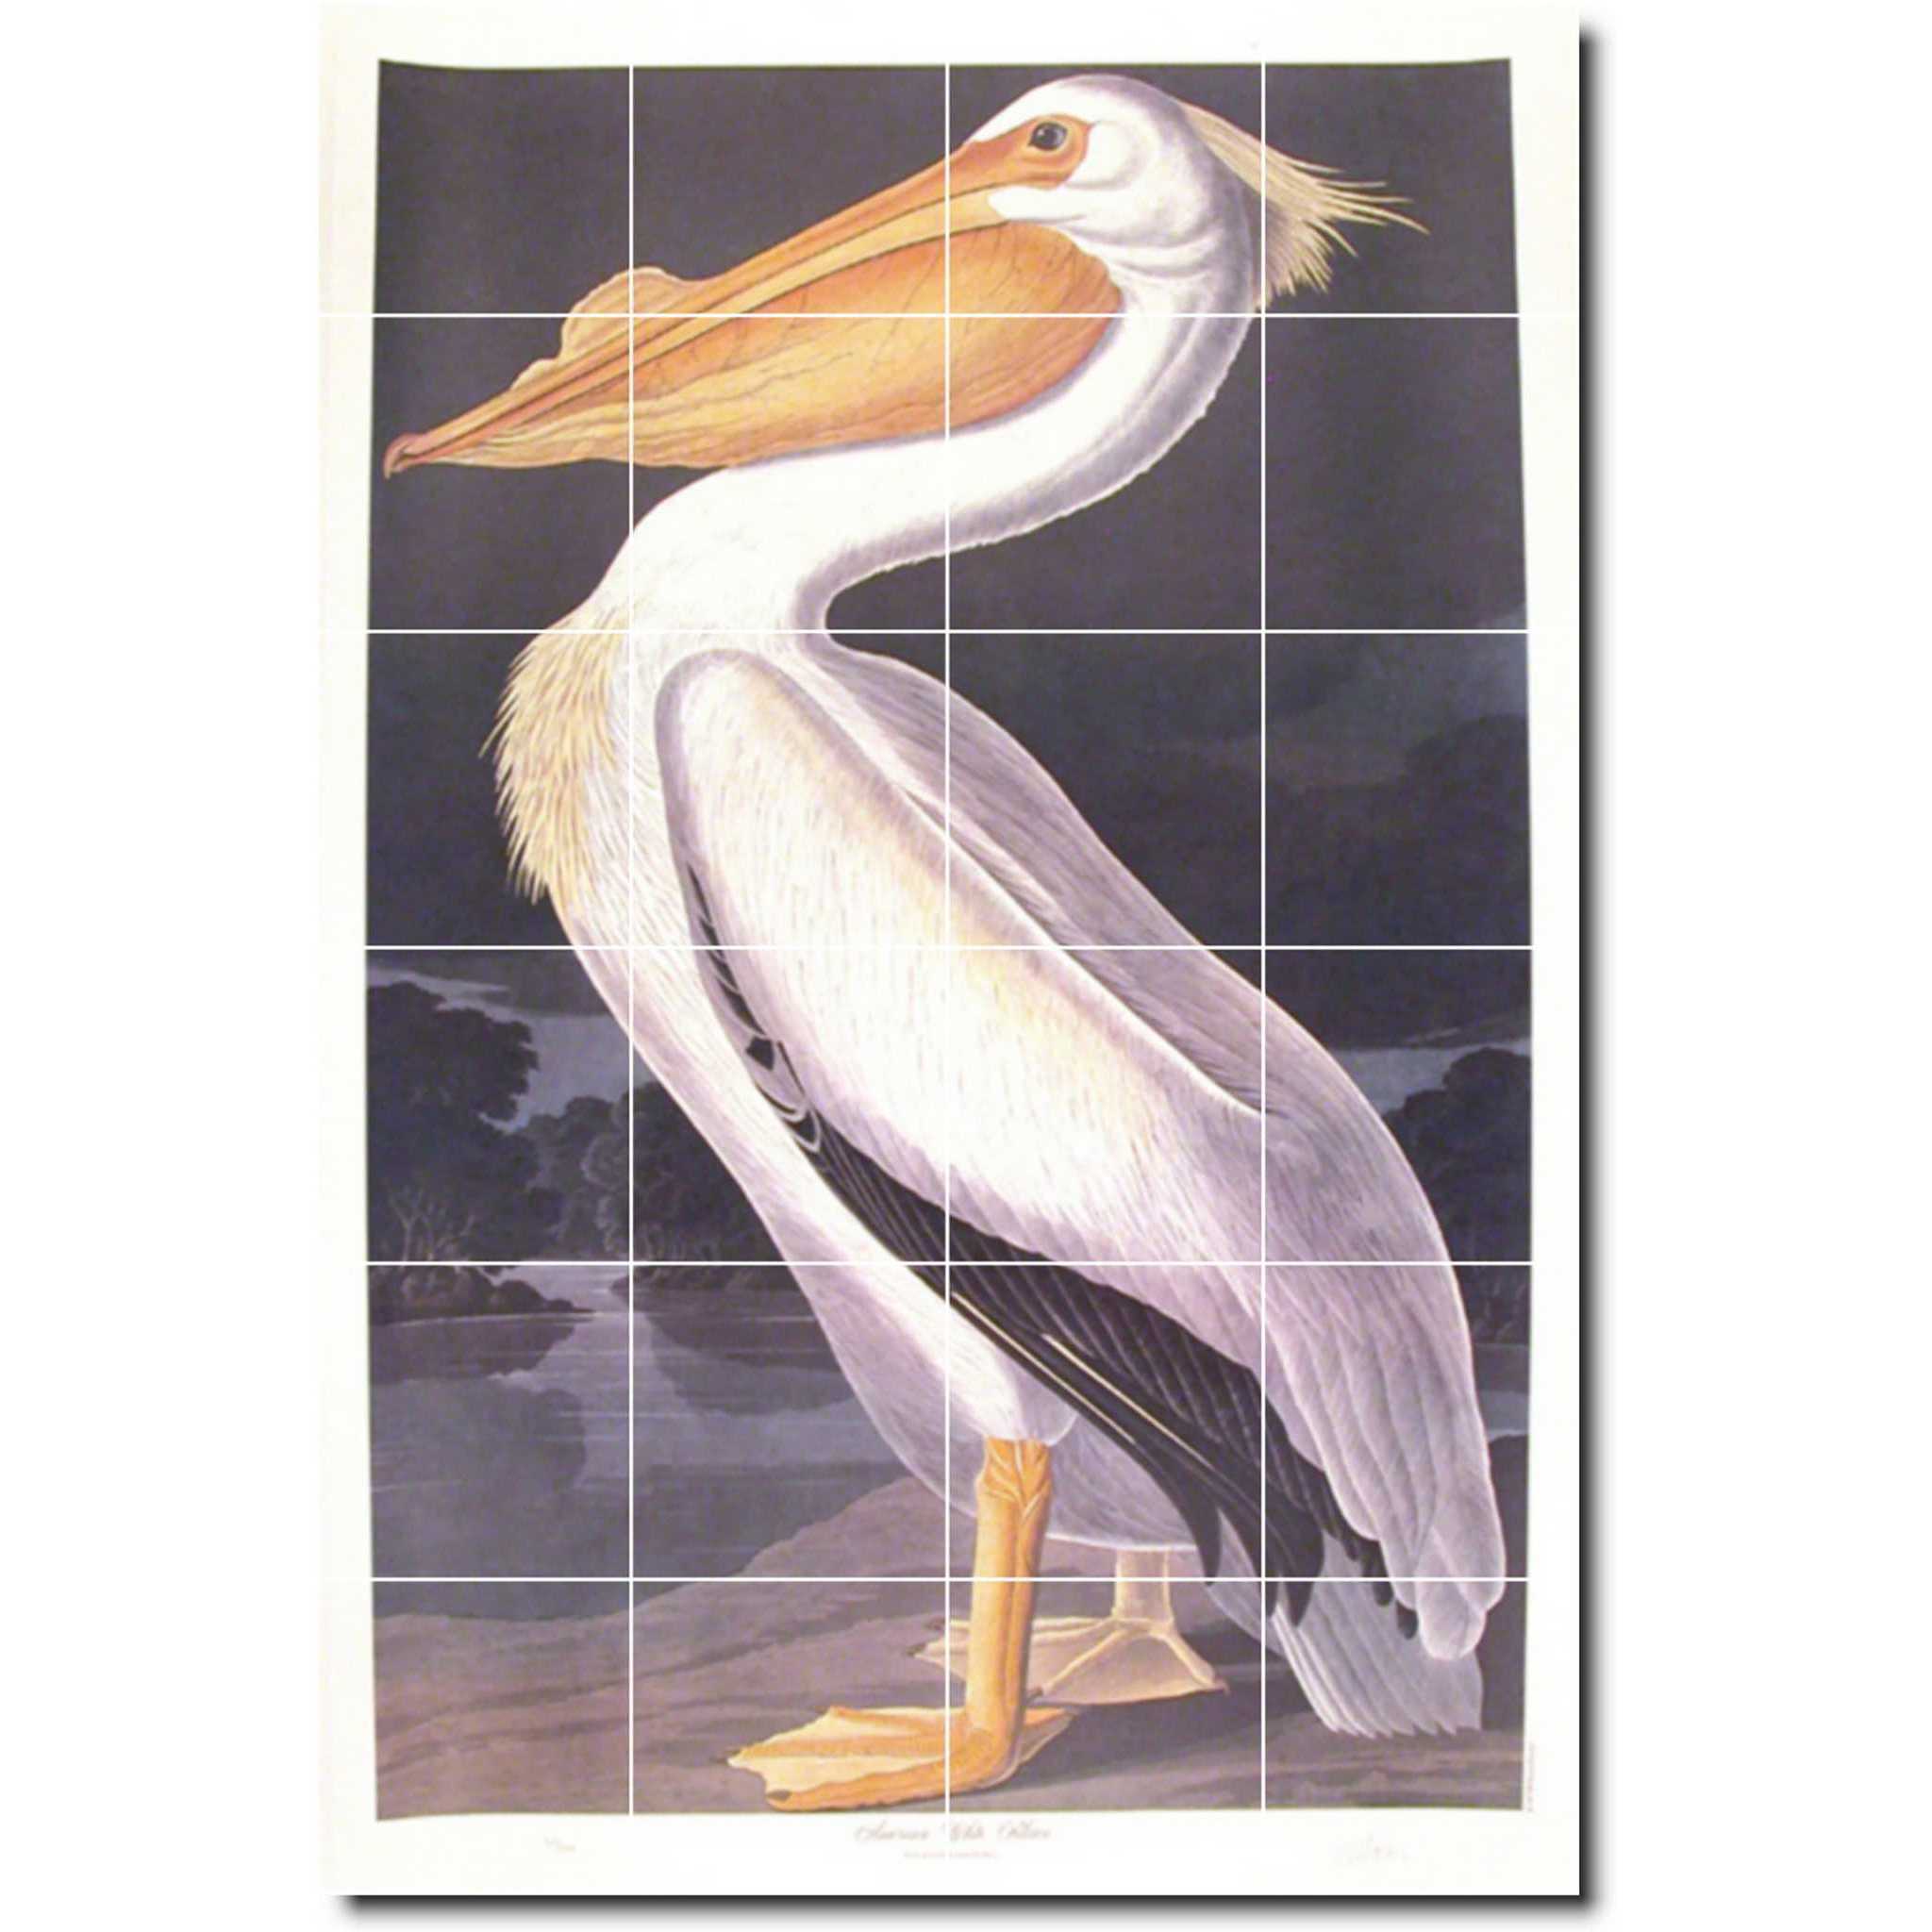 john audubon bird painting ceramic tile mural p00287